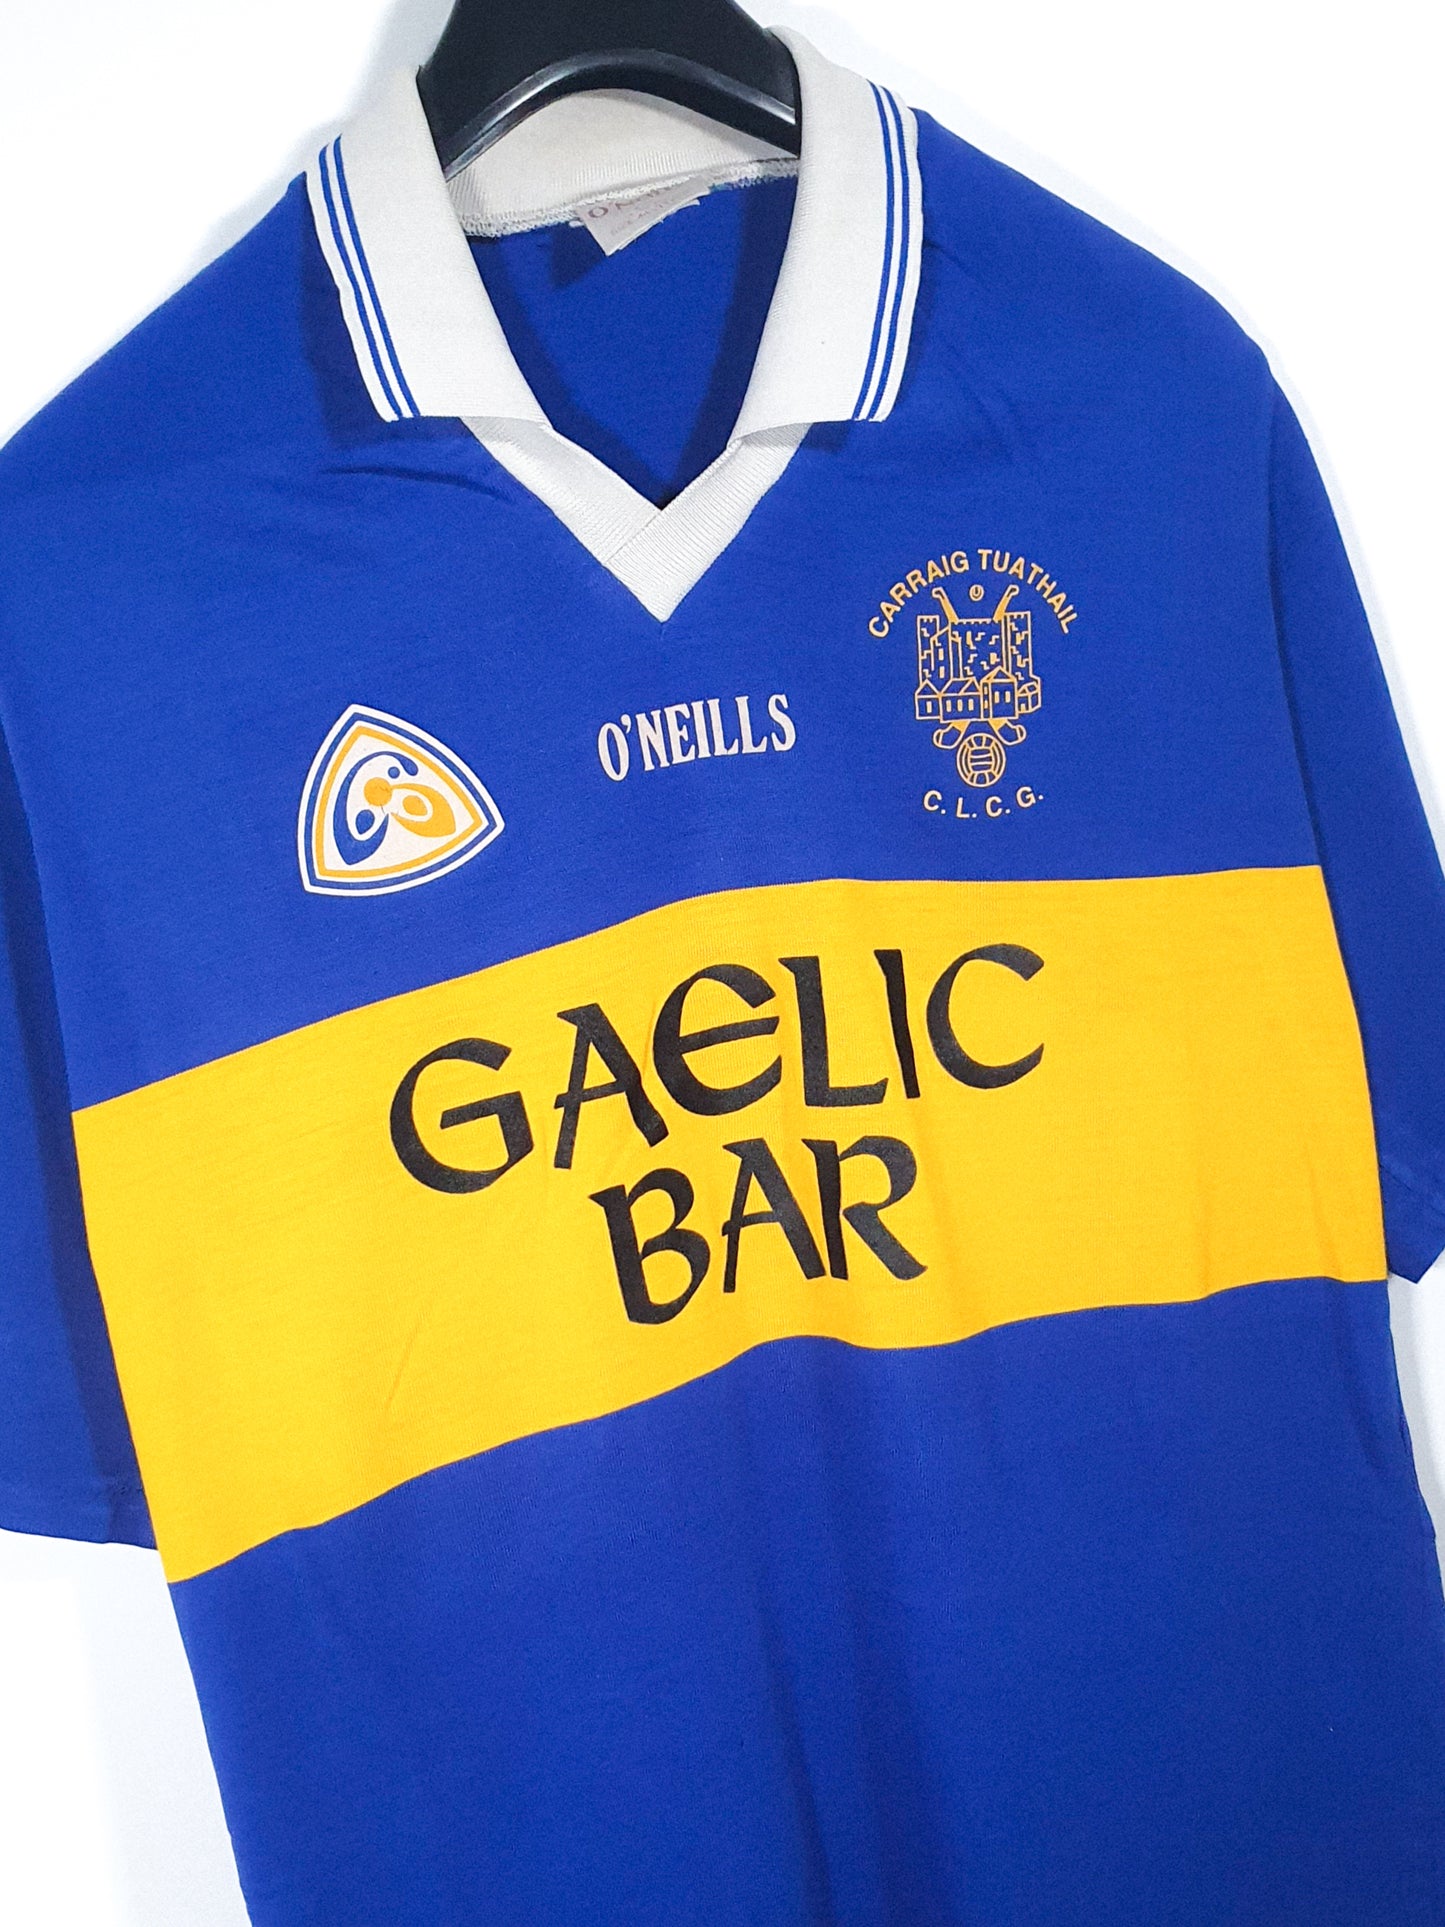 Carrigtuohill/Cork 1990s (L) - Match Worn #13